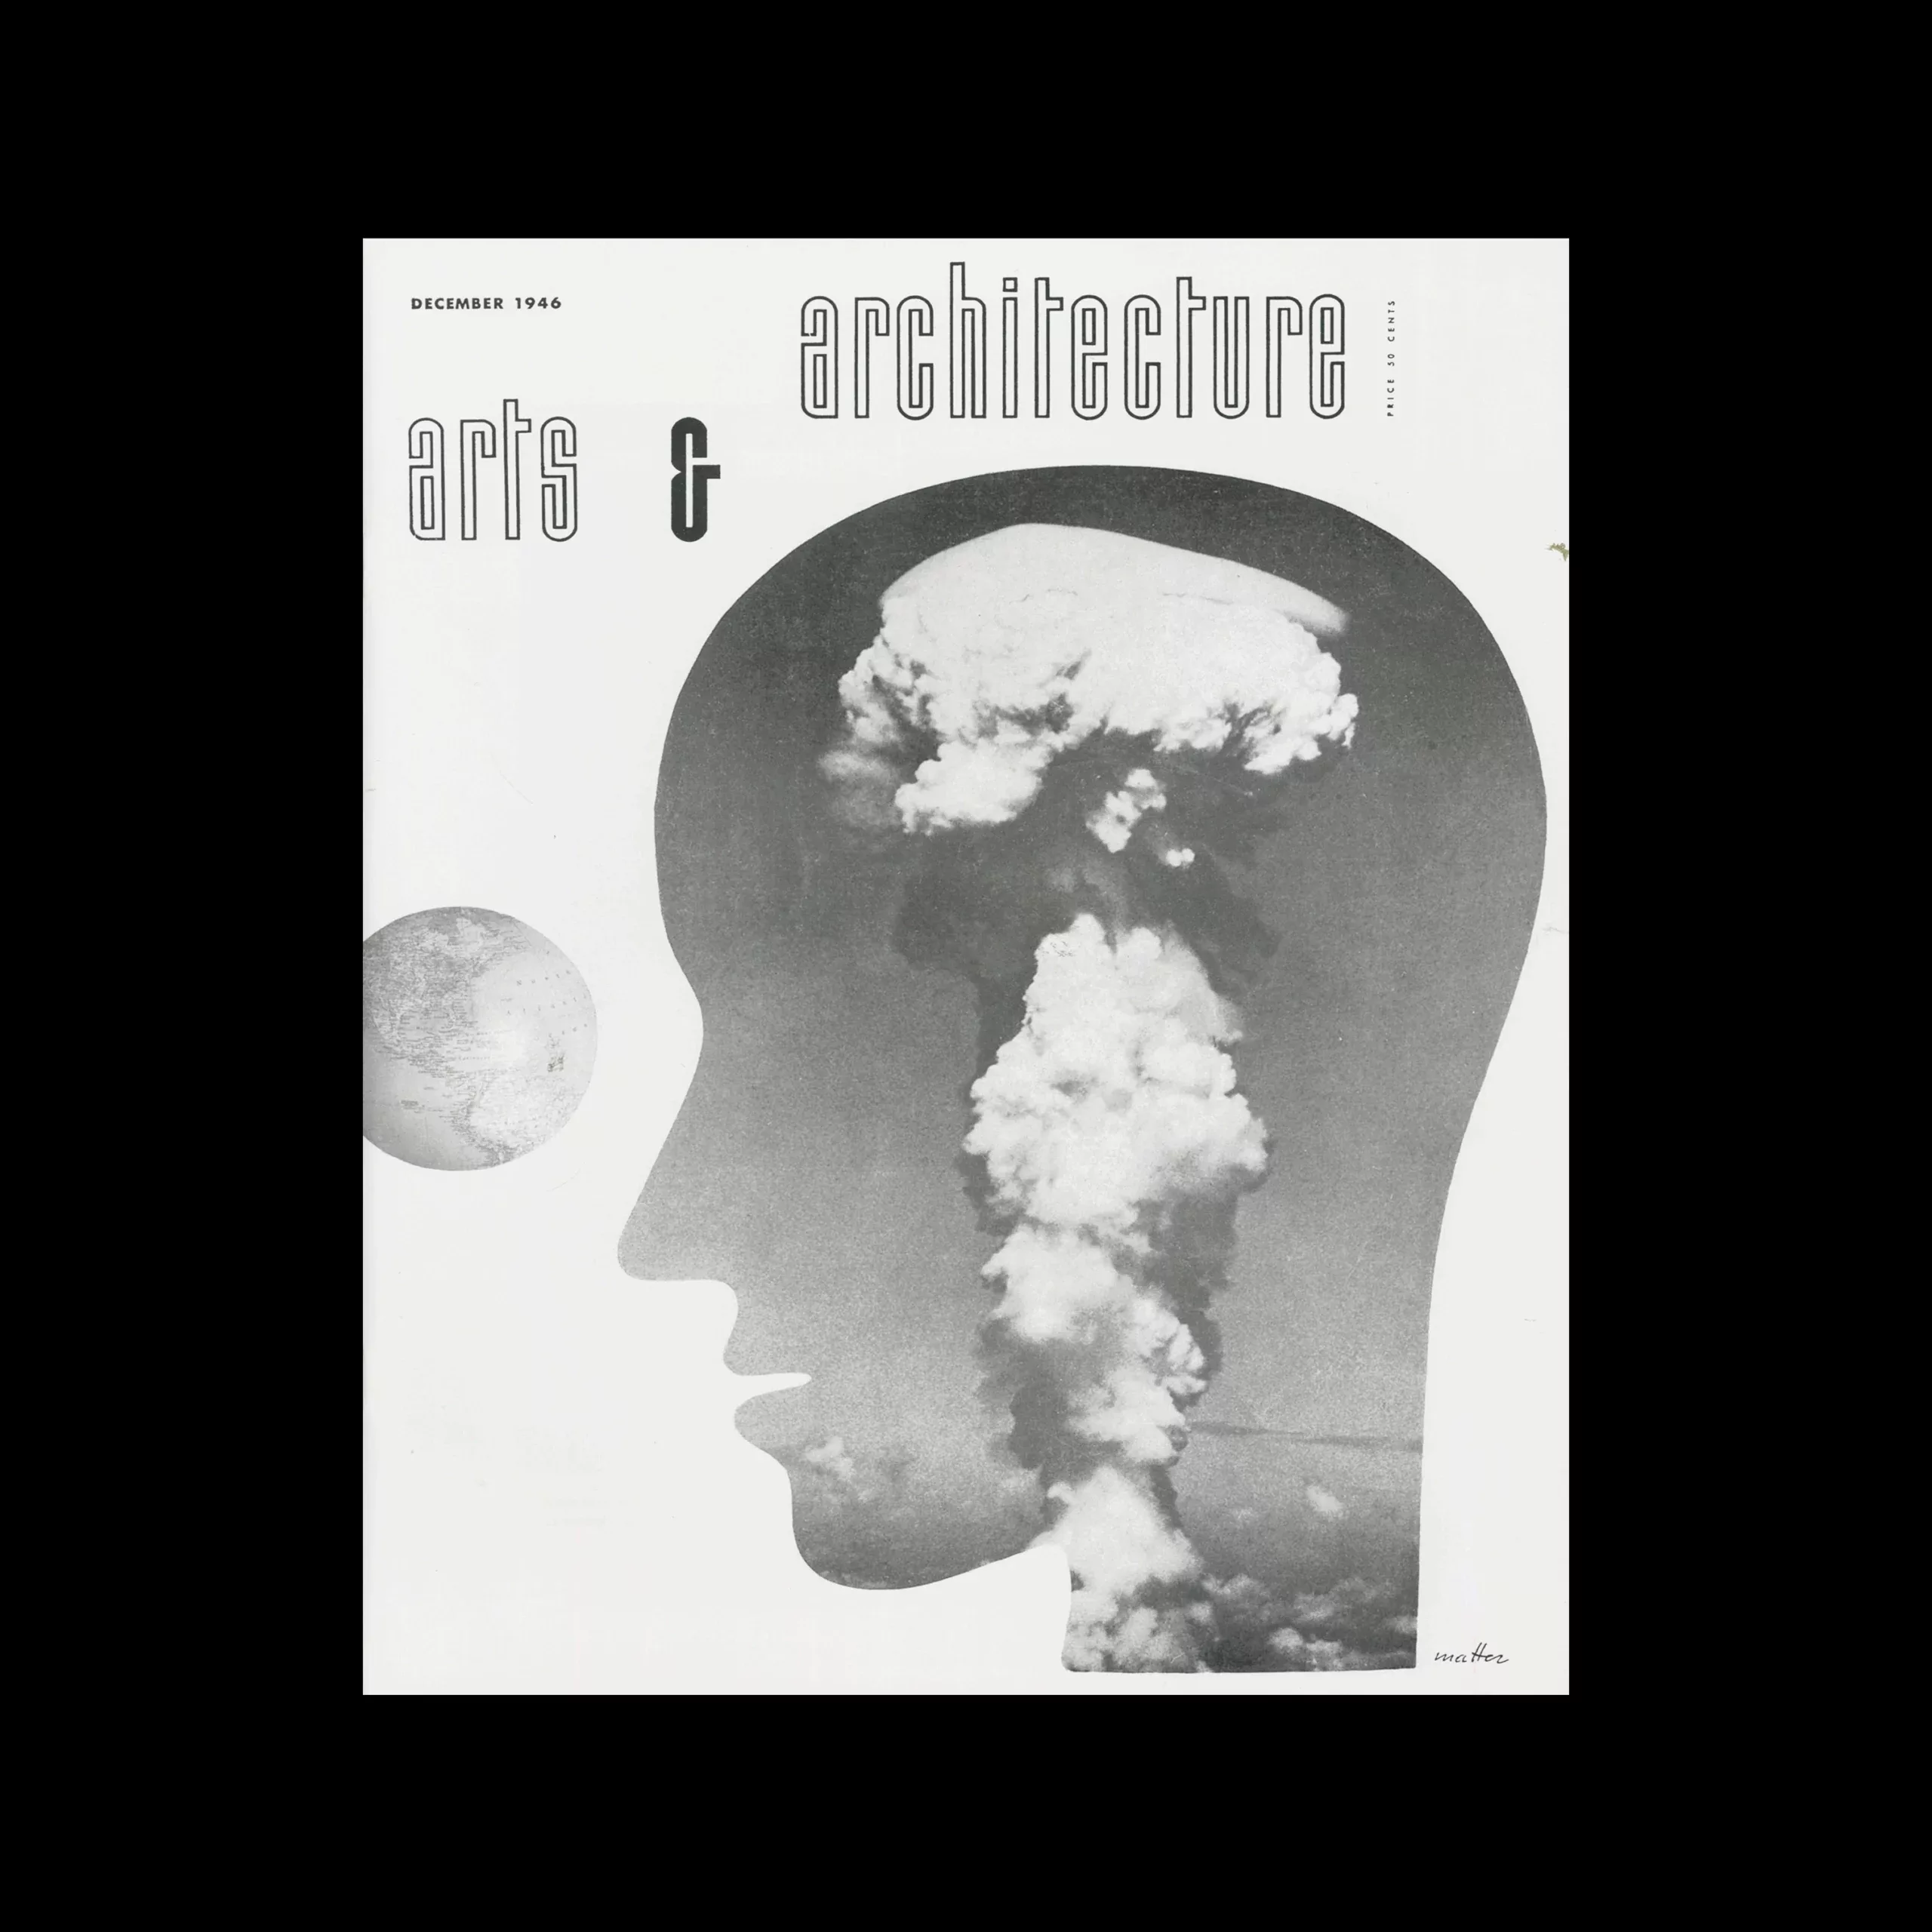 Arts & Architecture, December 1946, Complete Reprint, Tachen, 2008 Cover design by Herbert Matter